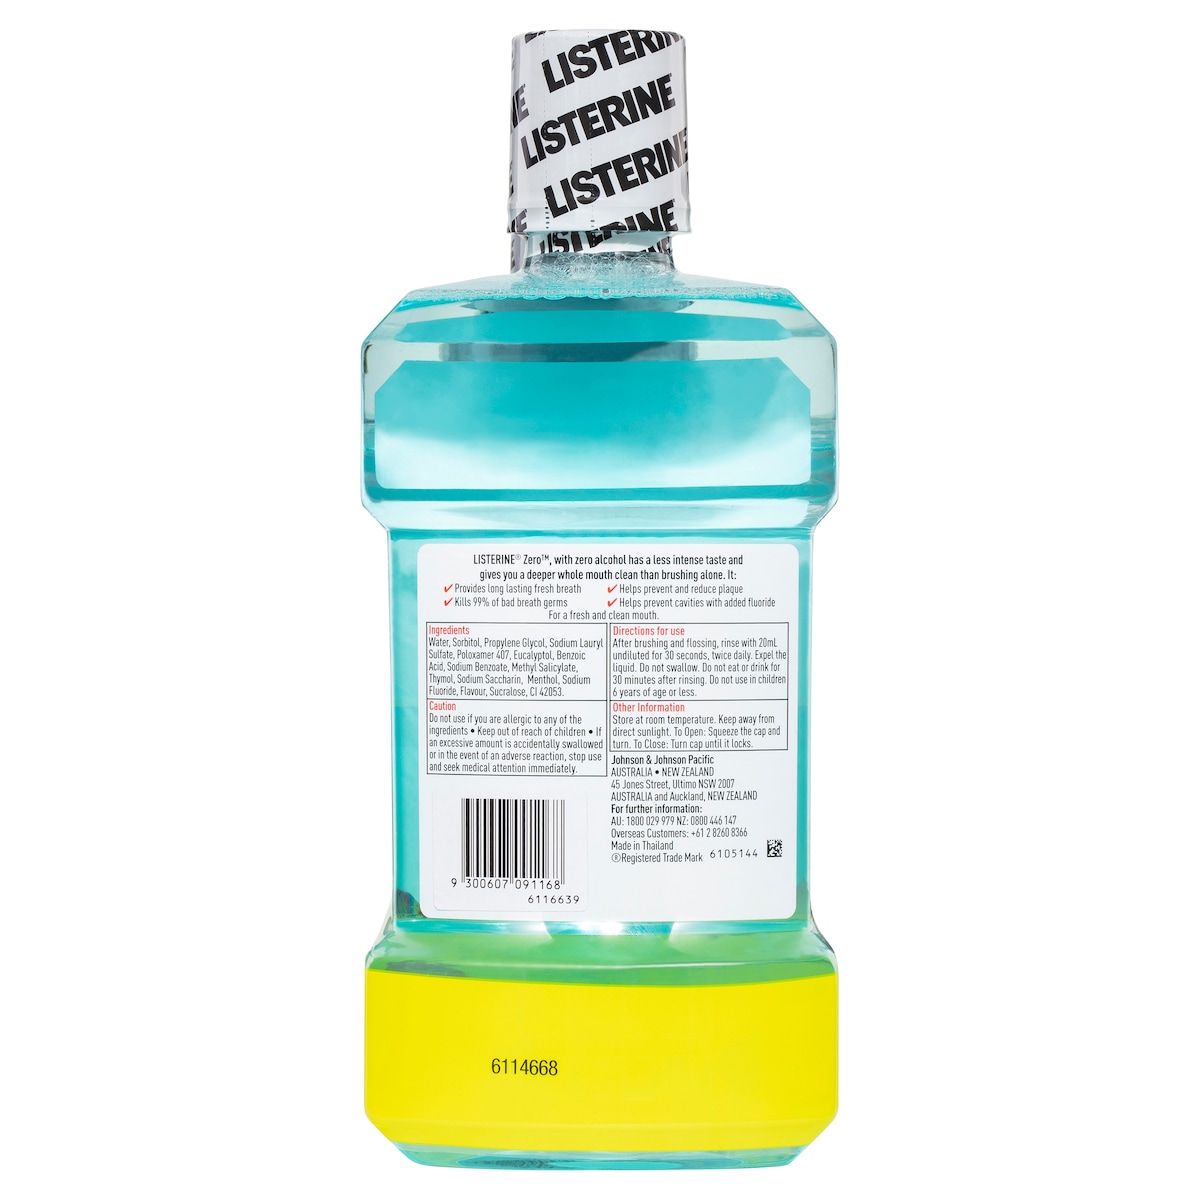 Listerine Zero Alcohol Antibacterial Mouthwash 1 Litre + 500Ml Value Pack